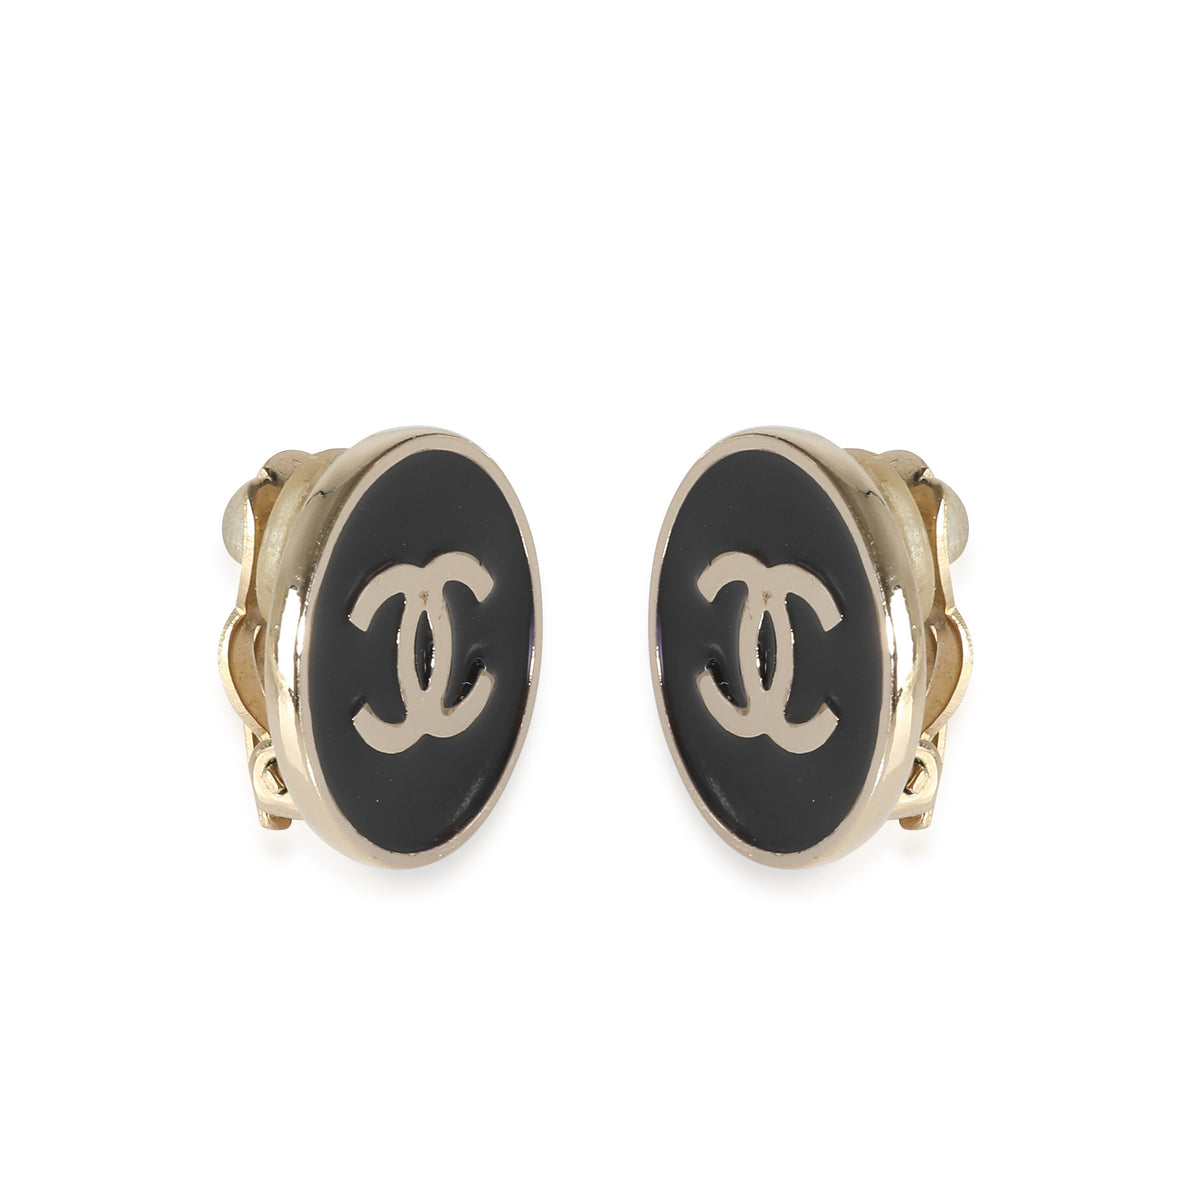 CC Gold Tone with Black Enamel Button Earrings